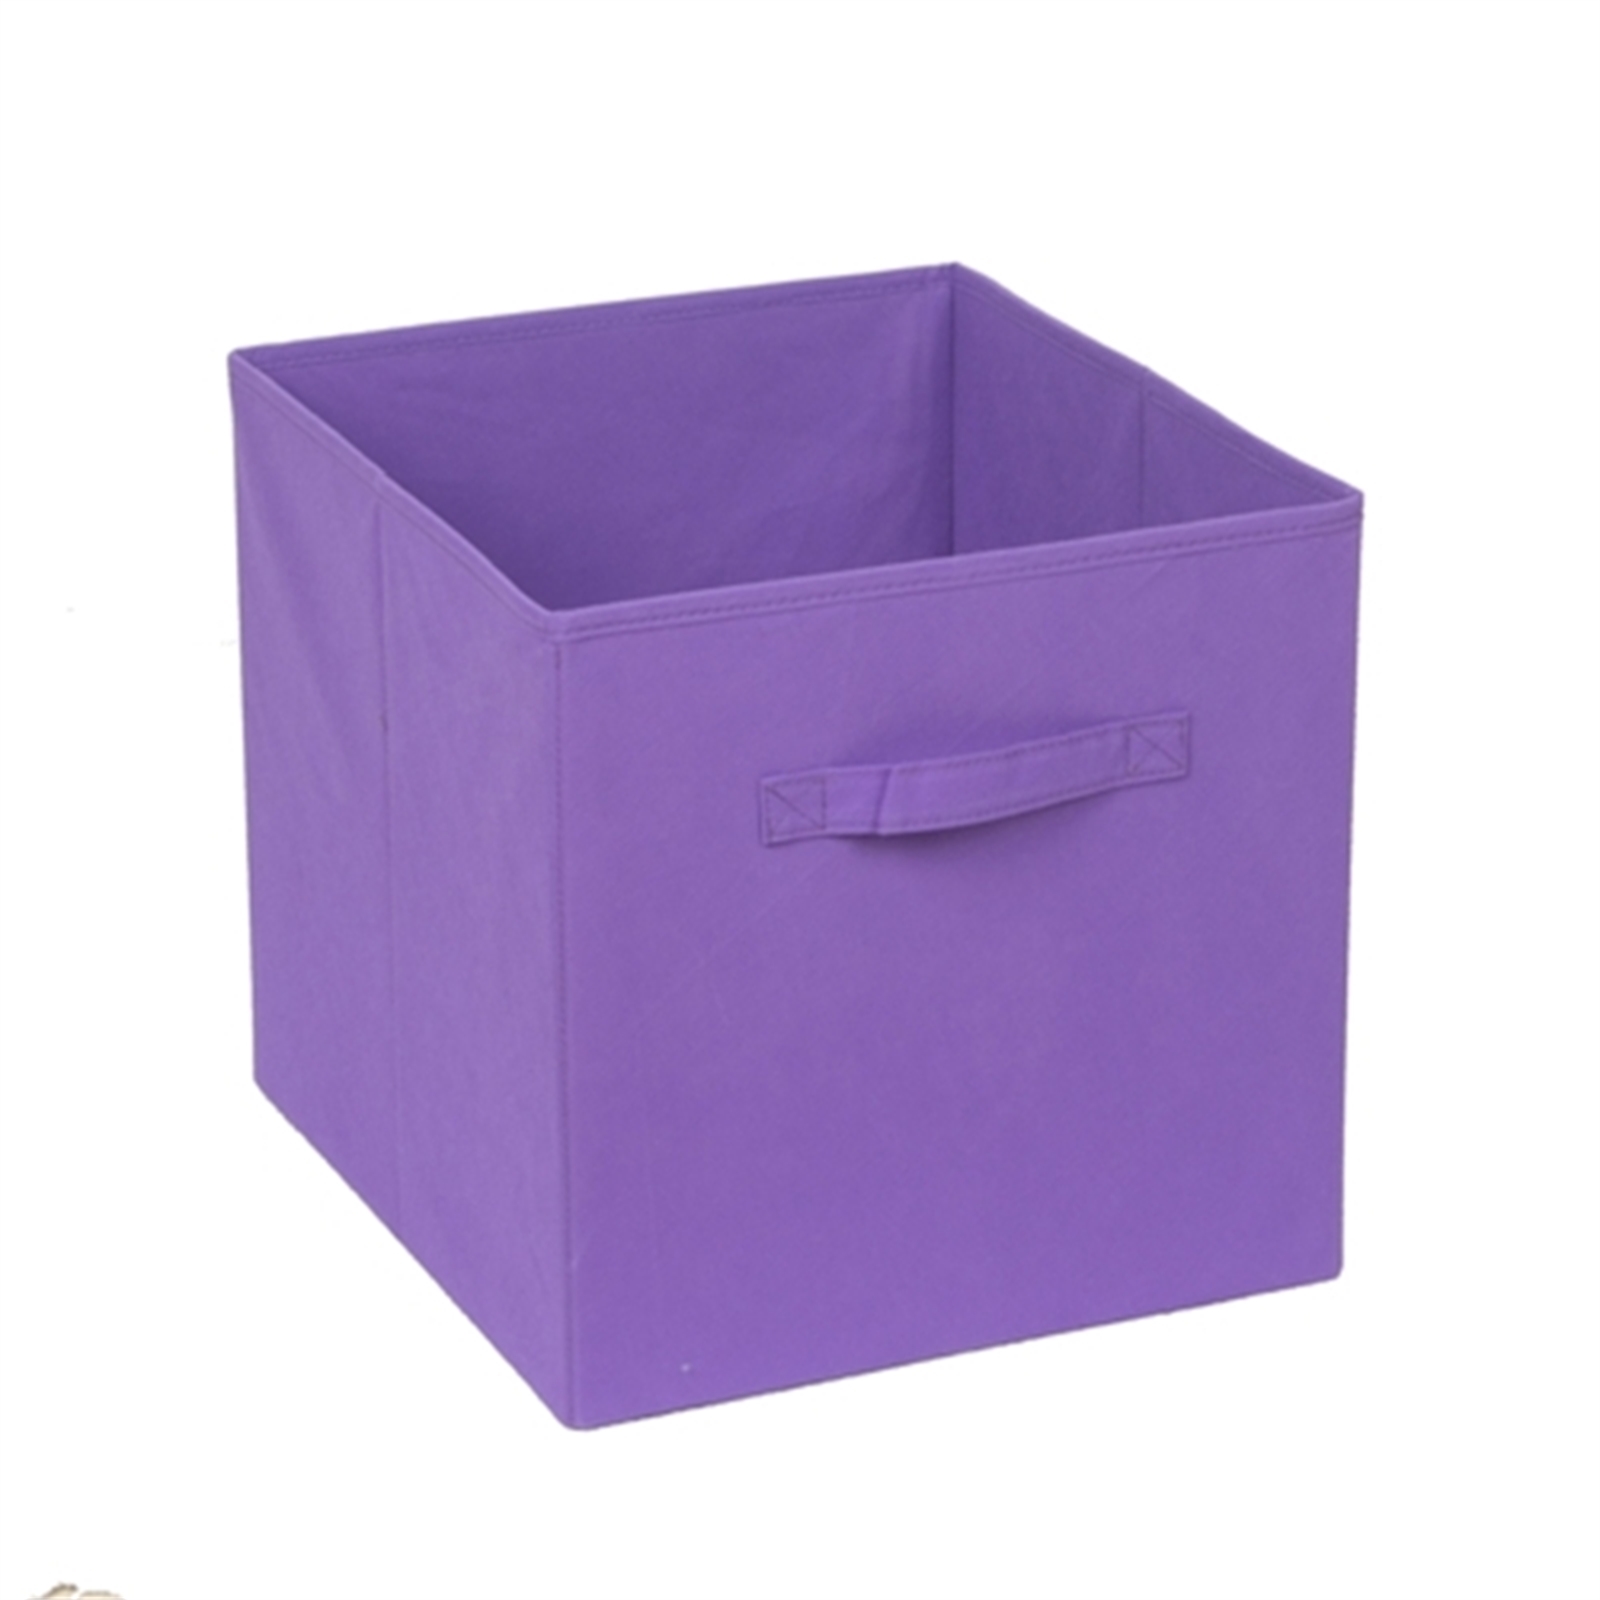 Clever Cube 330 x 330 x 370mm Purple Fabric Insert